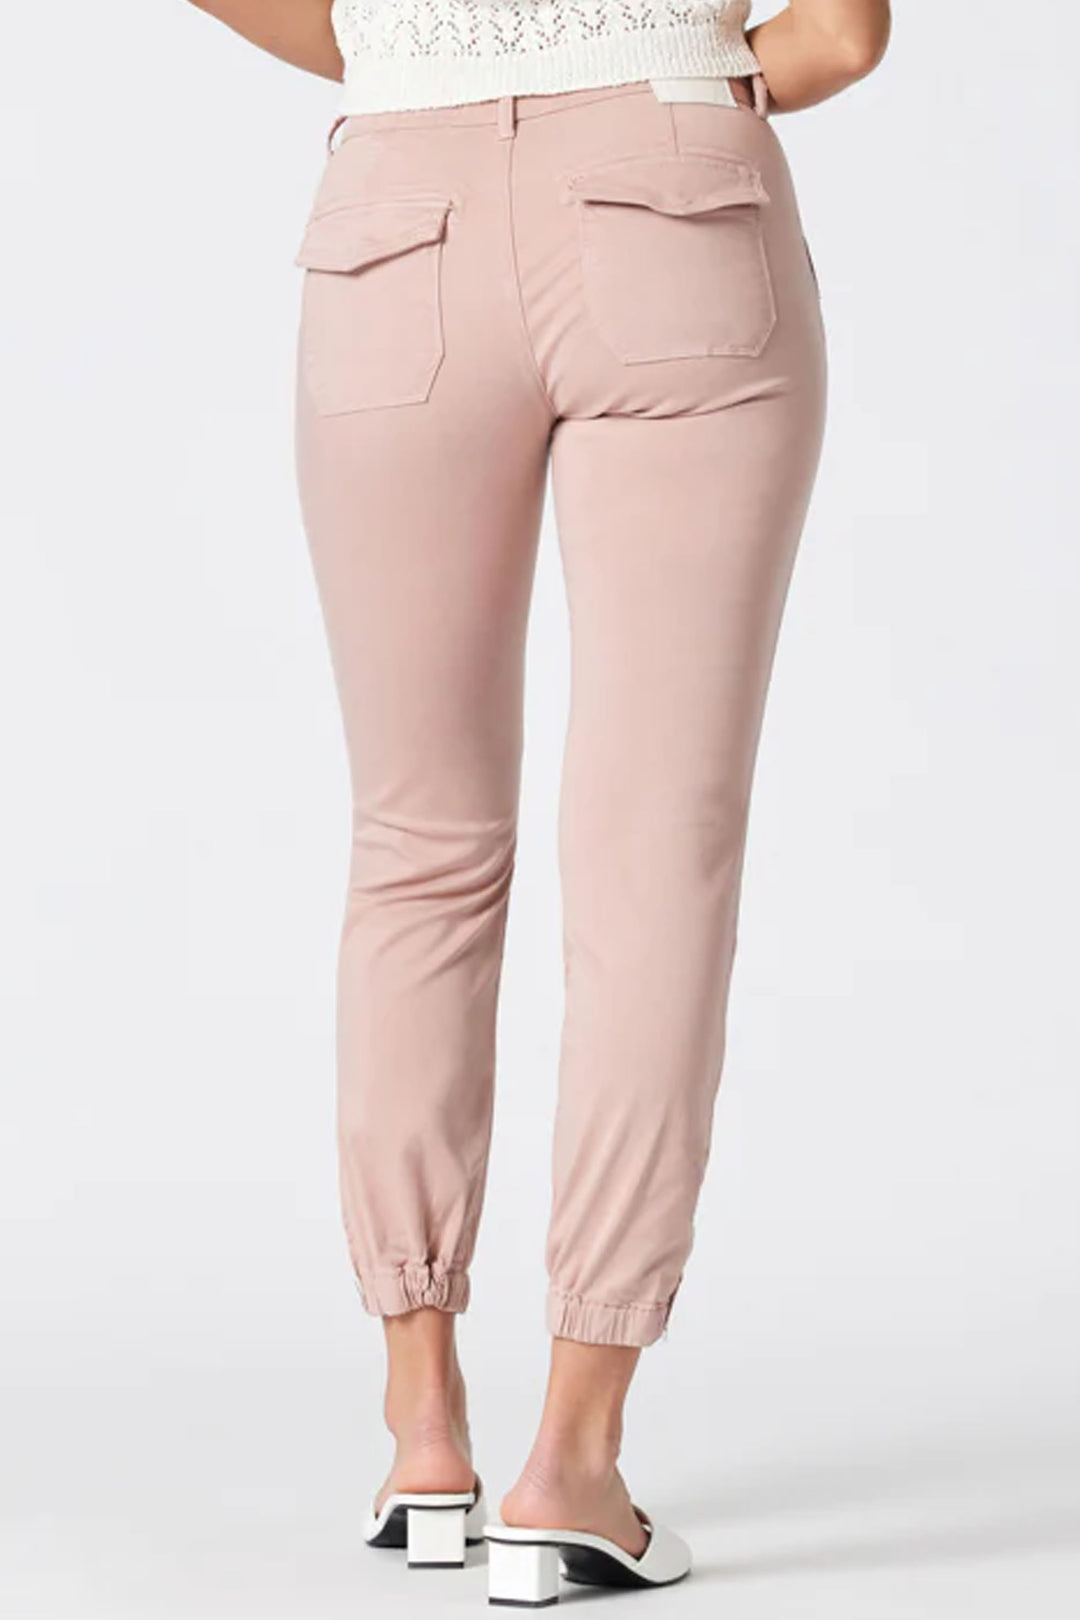 Mavi Jeans Spring 2023 women's casual cotton light pink cropped slim cargo pants - back